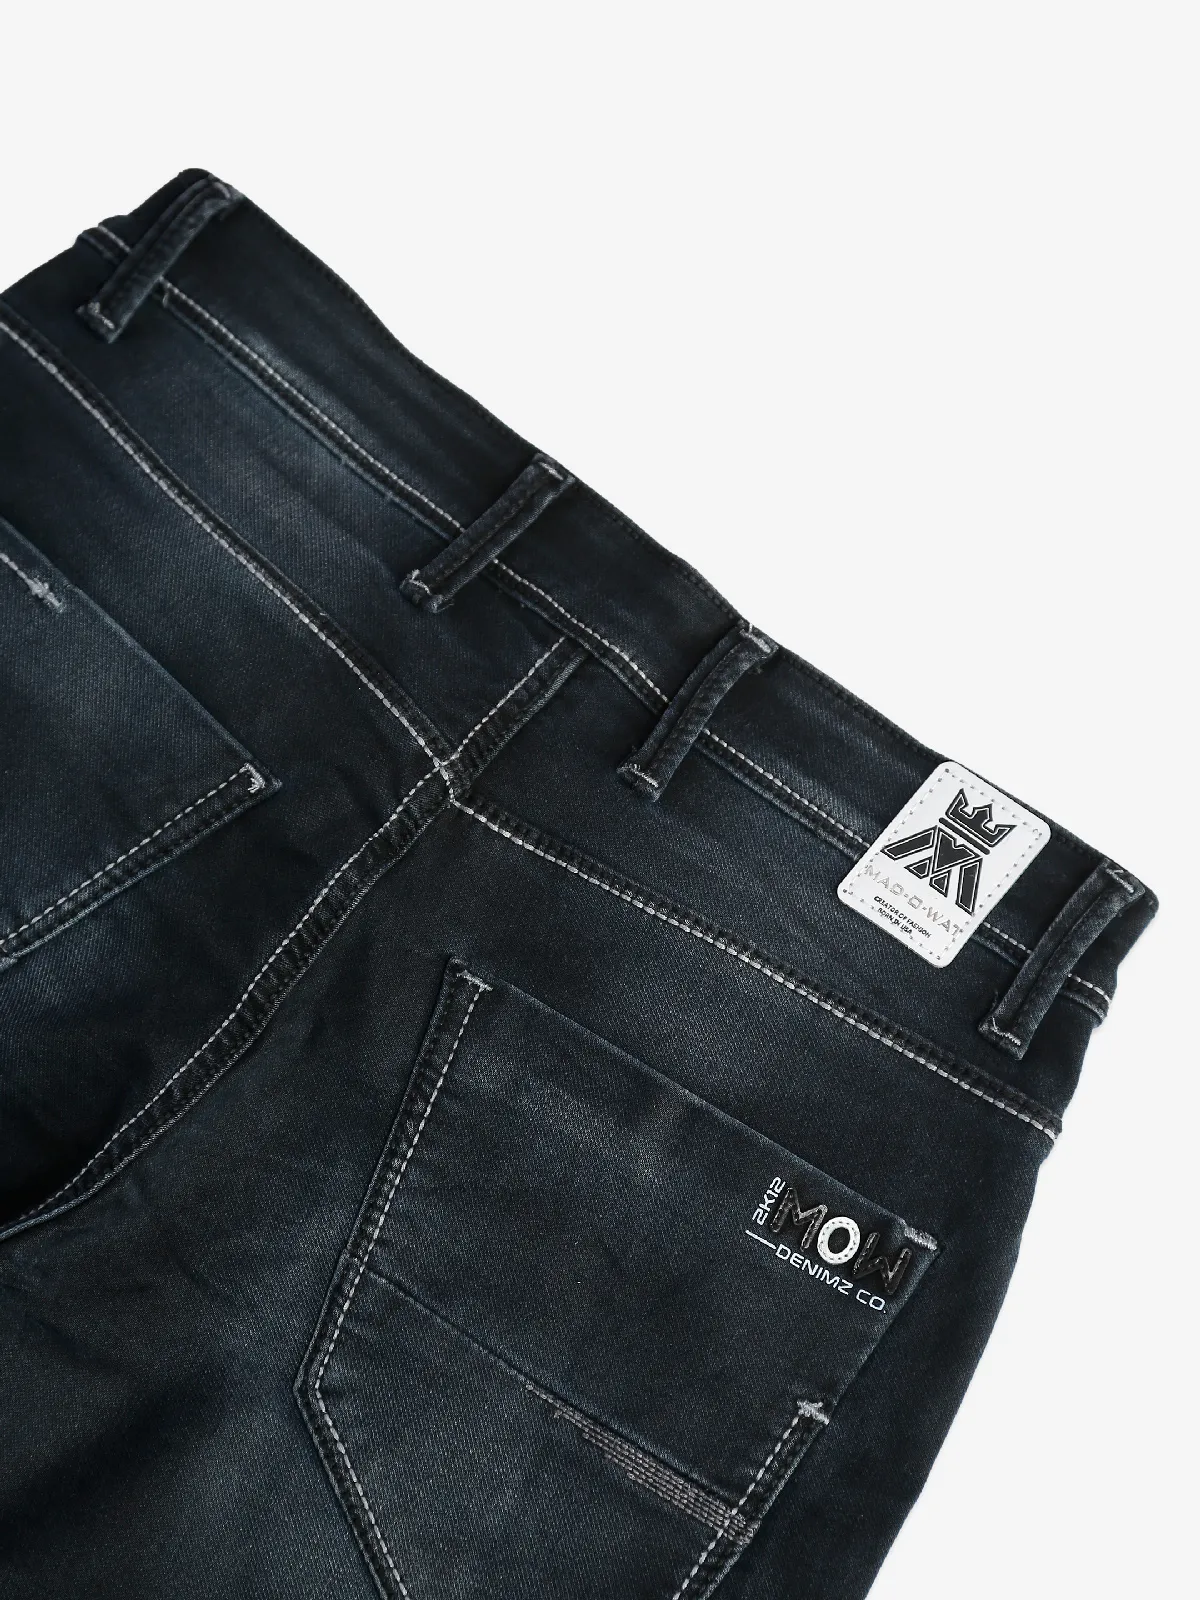 Mad-O-Wat washed latest regular fit black jeans